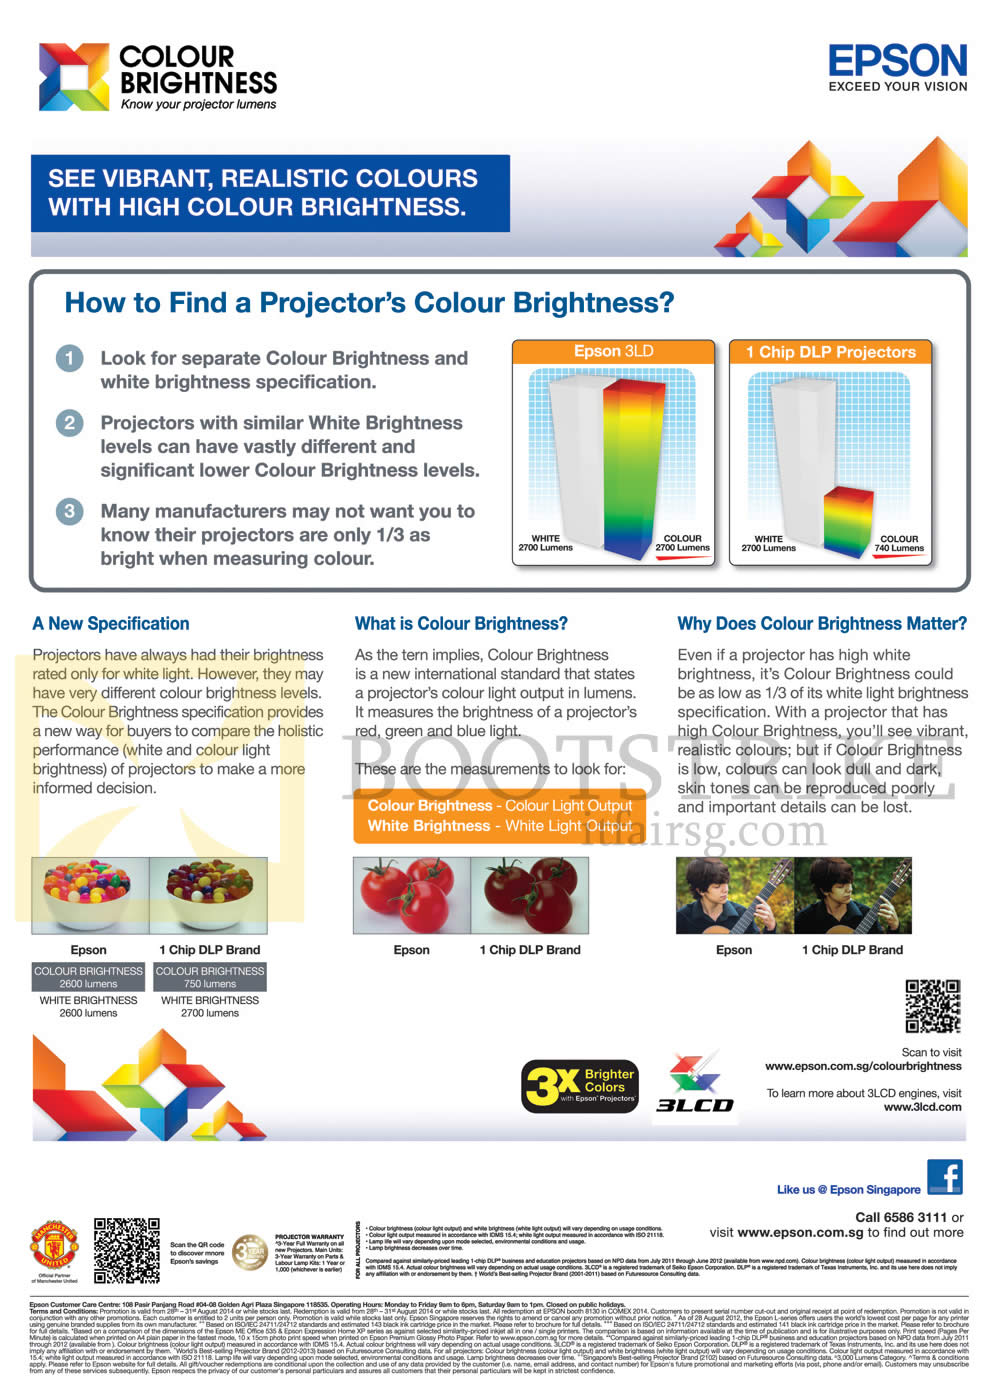 COMEX 2014 price list image brochure of Epson Colour Brightness Printer Features